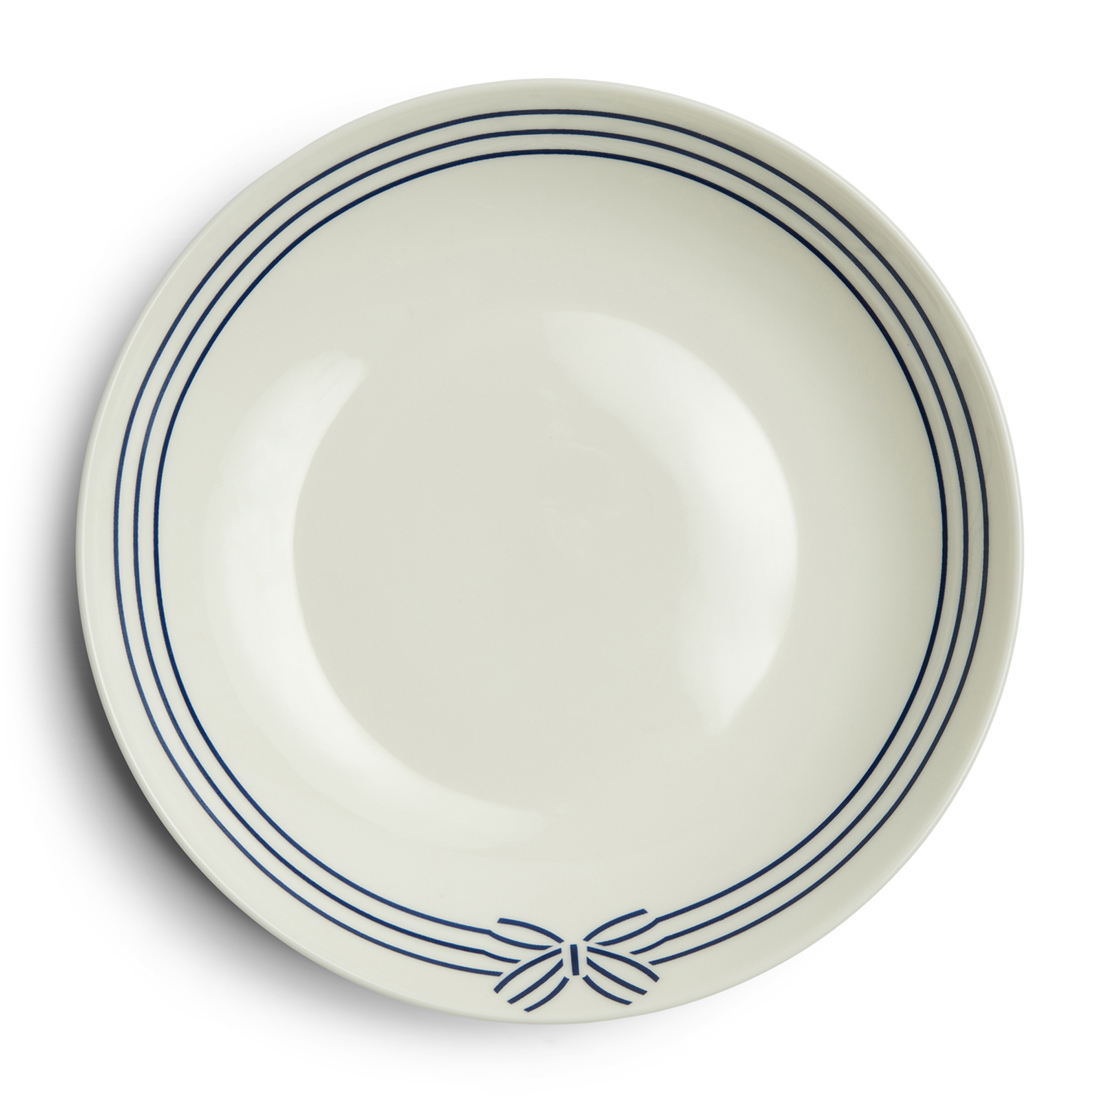 Riviera Maison diep bord, saladebord strepen met strik - Shoreline Salad Plate - Blauw/ Wit - Porselein - 1 stuk